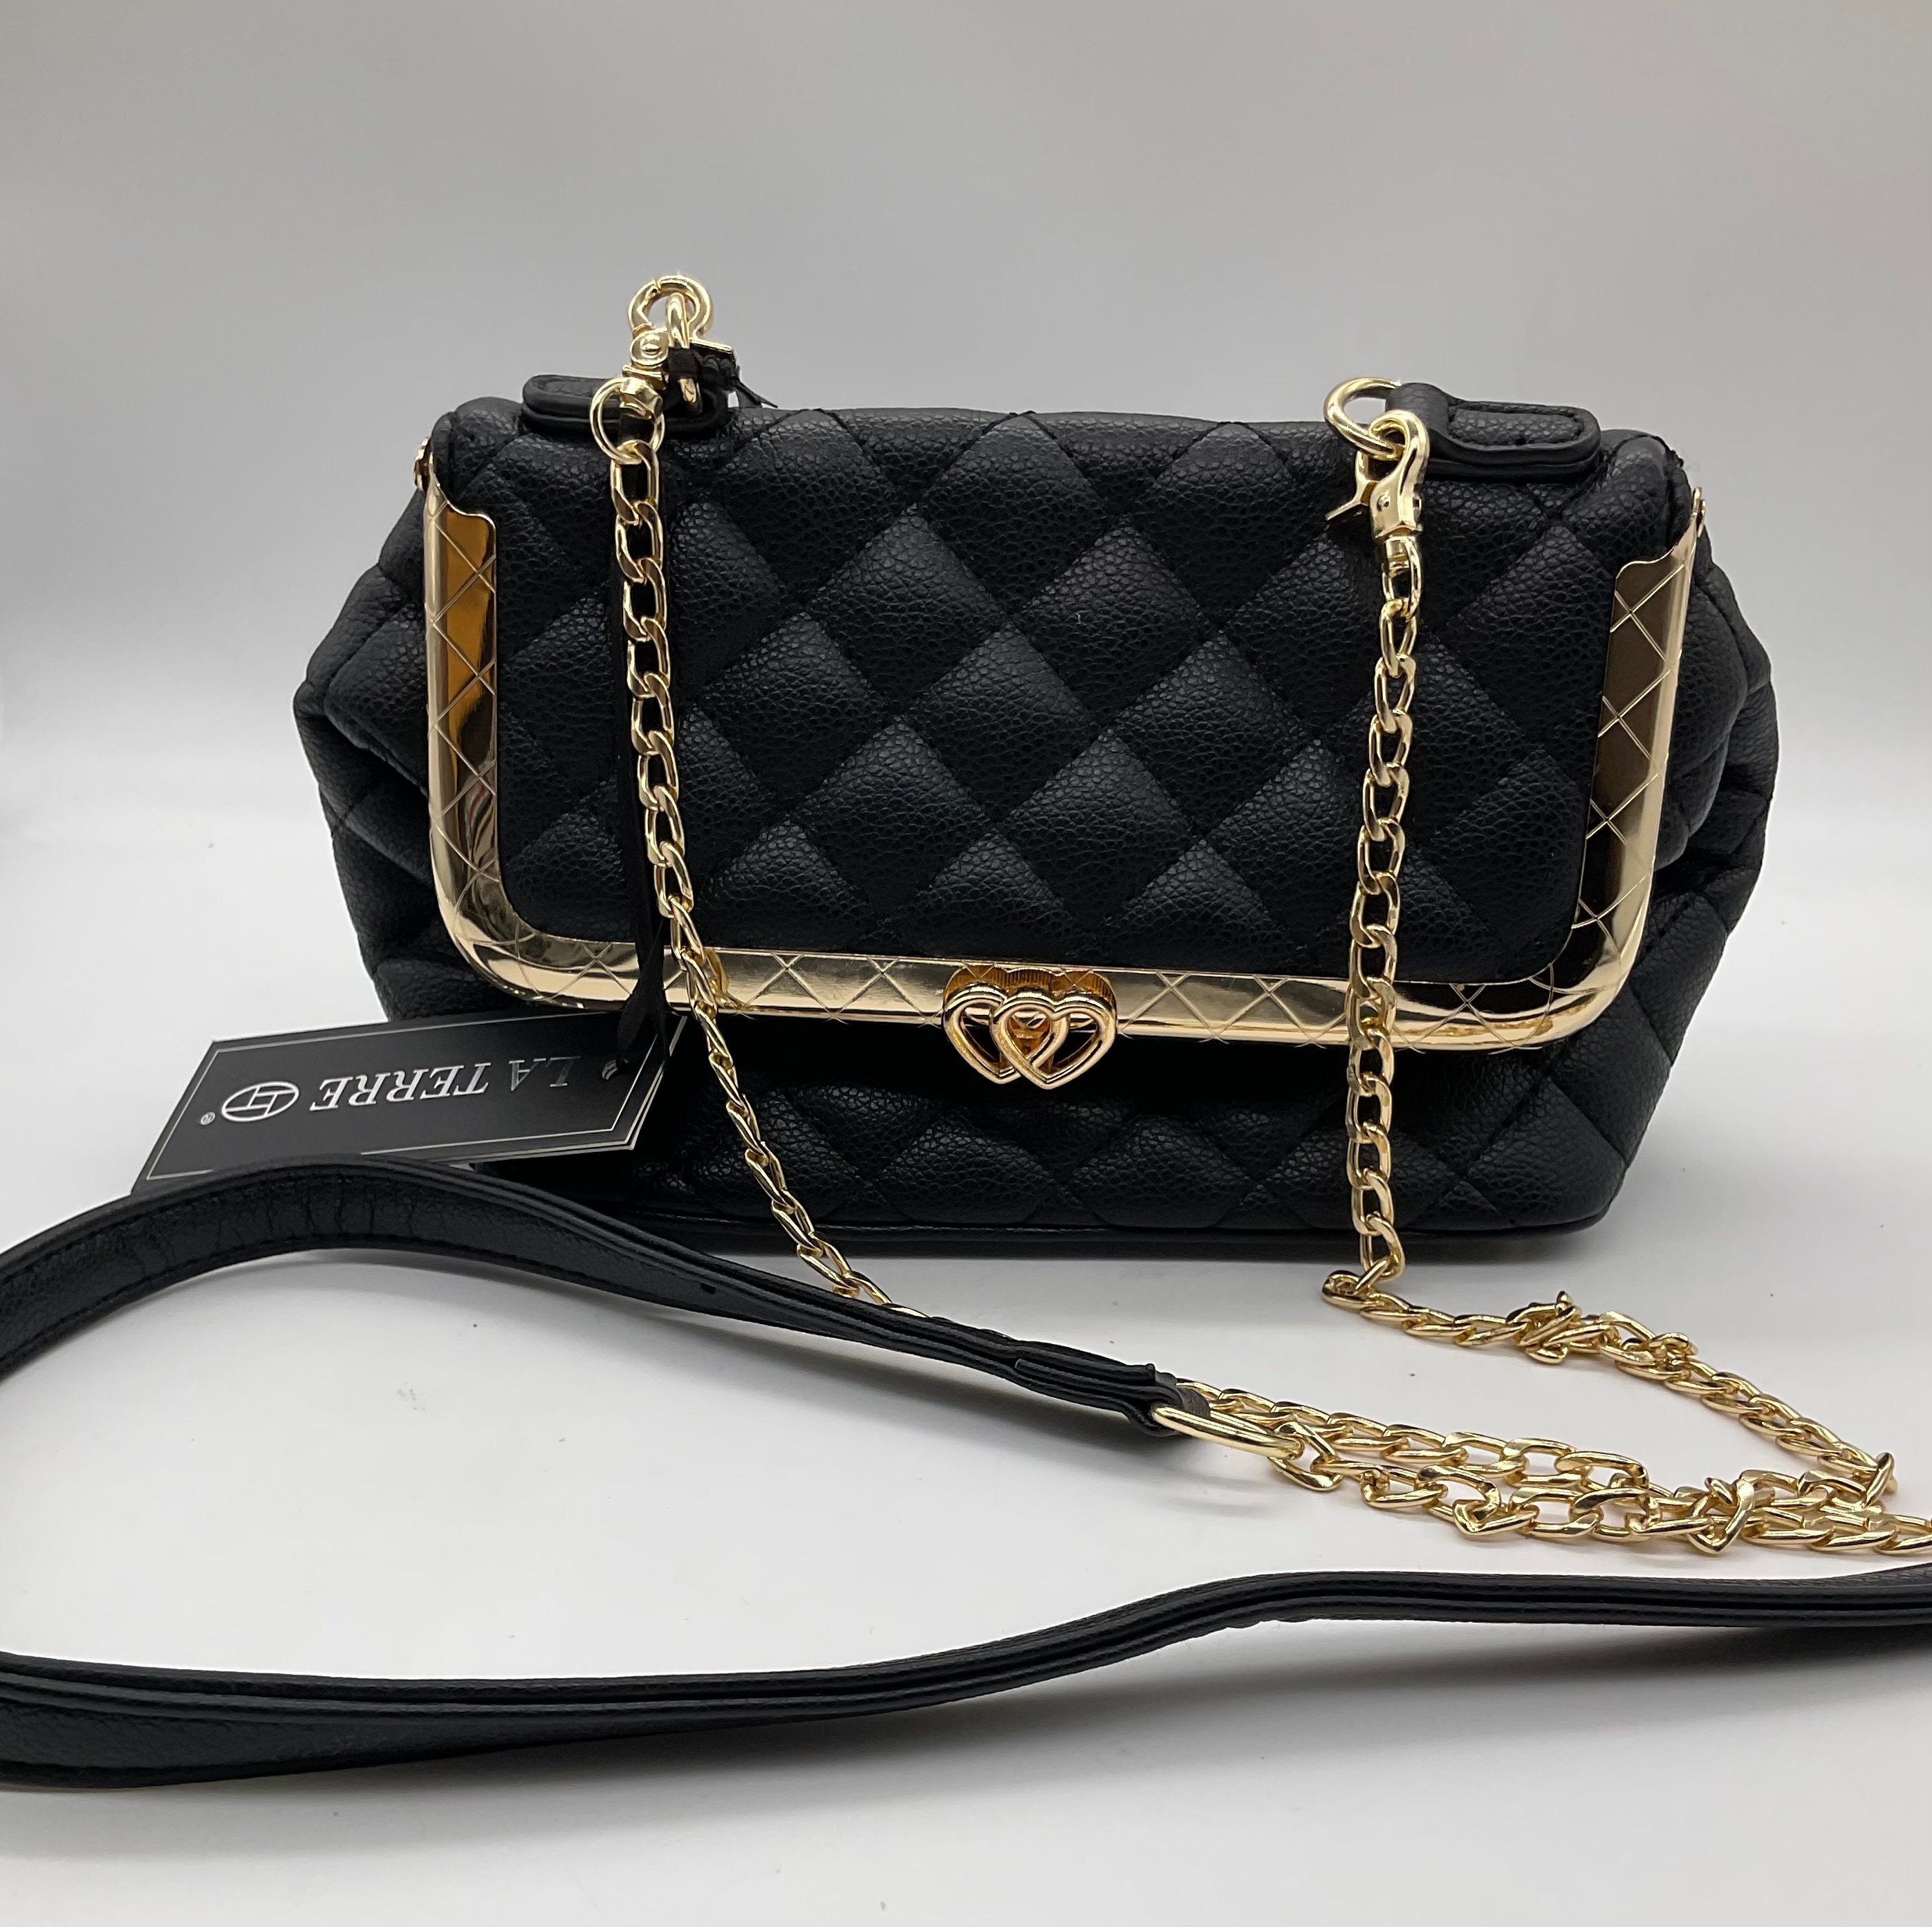 Chanel 2011 Metier D'art Python Crystal Cc Bag